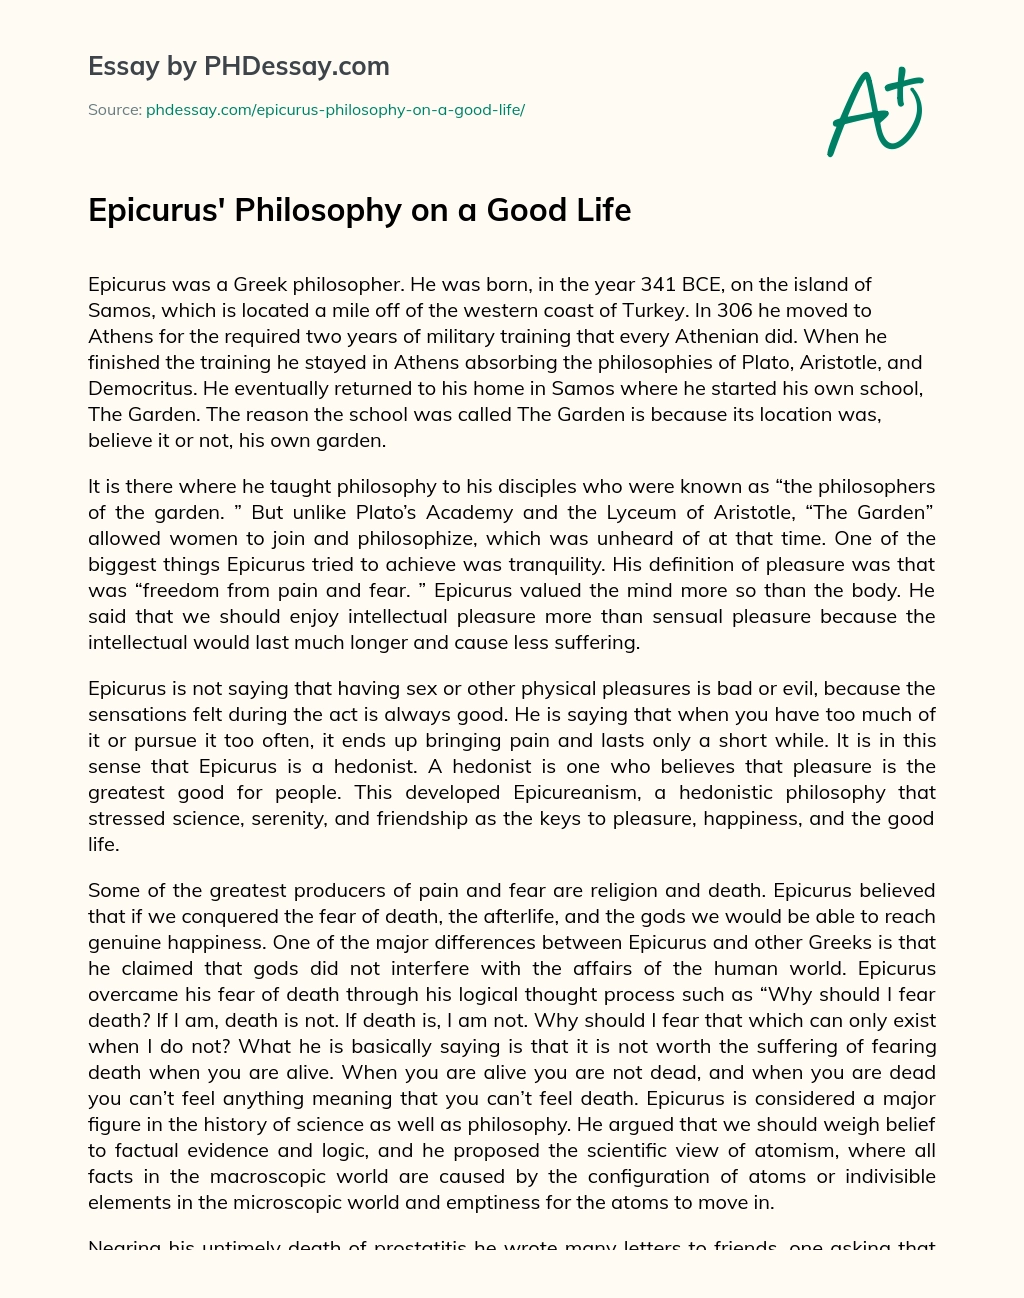 Epicurus’ Philosophy on a Good Life essay